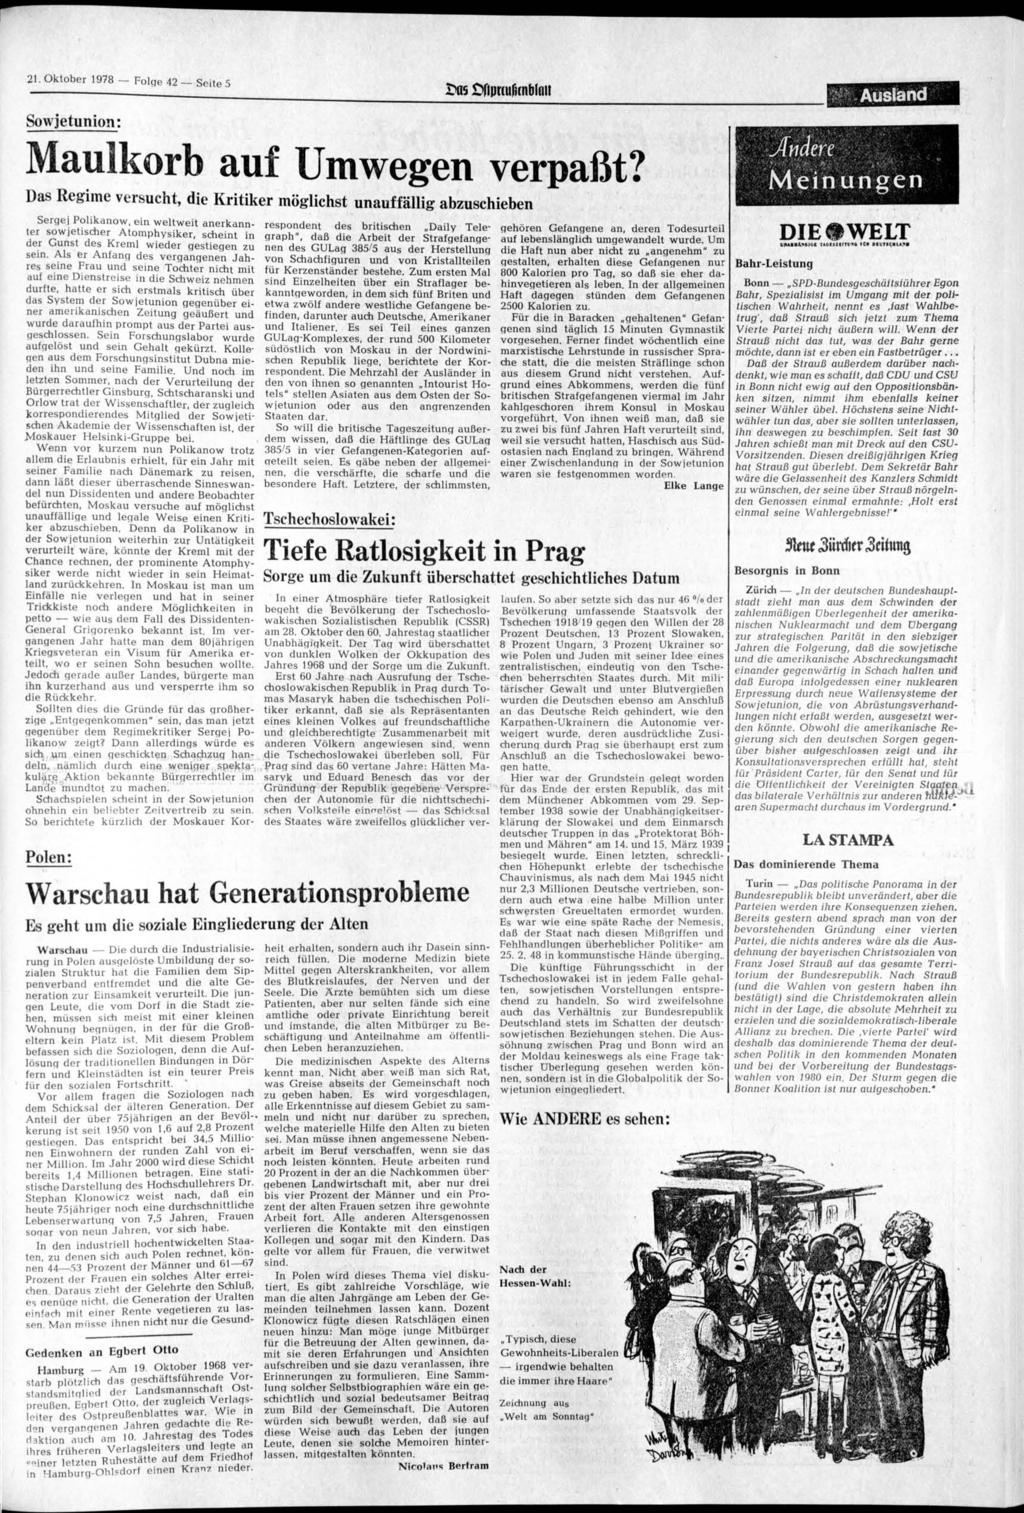 21. Oktober 1978 Folge 42 Seite 5 Sowjetunion: Maulkorb auf Umwegen verpaßt?